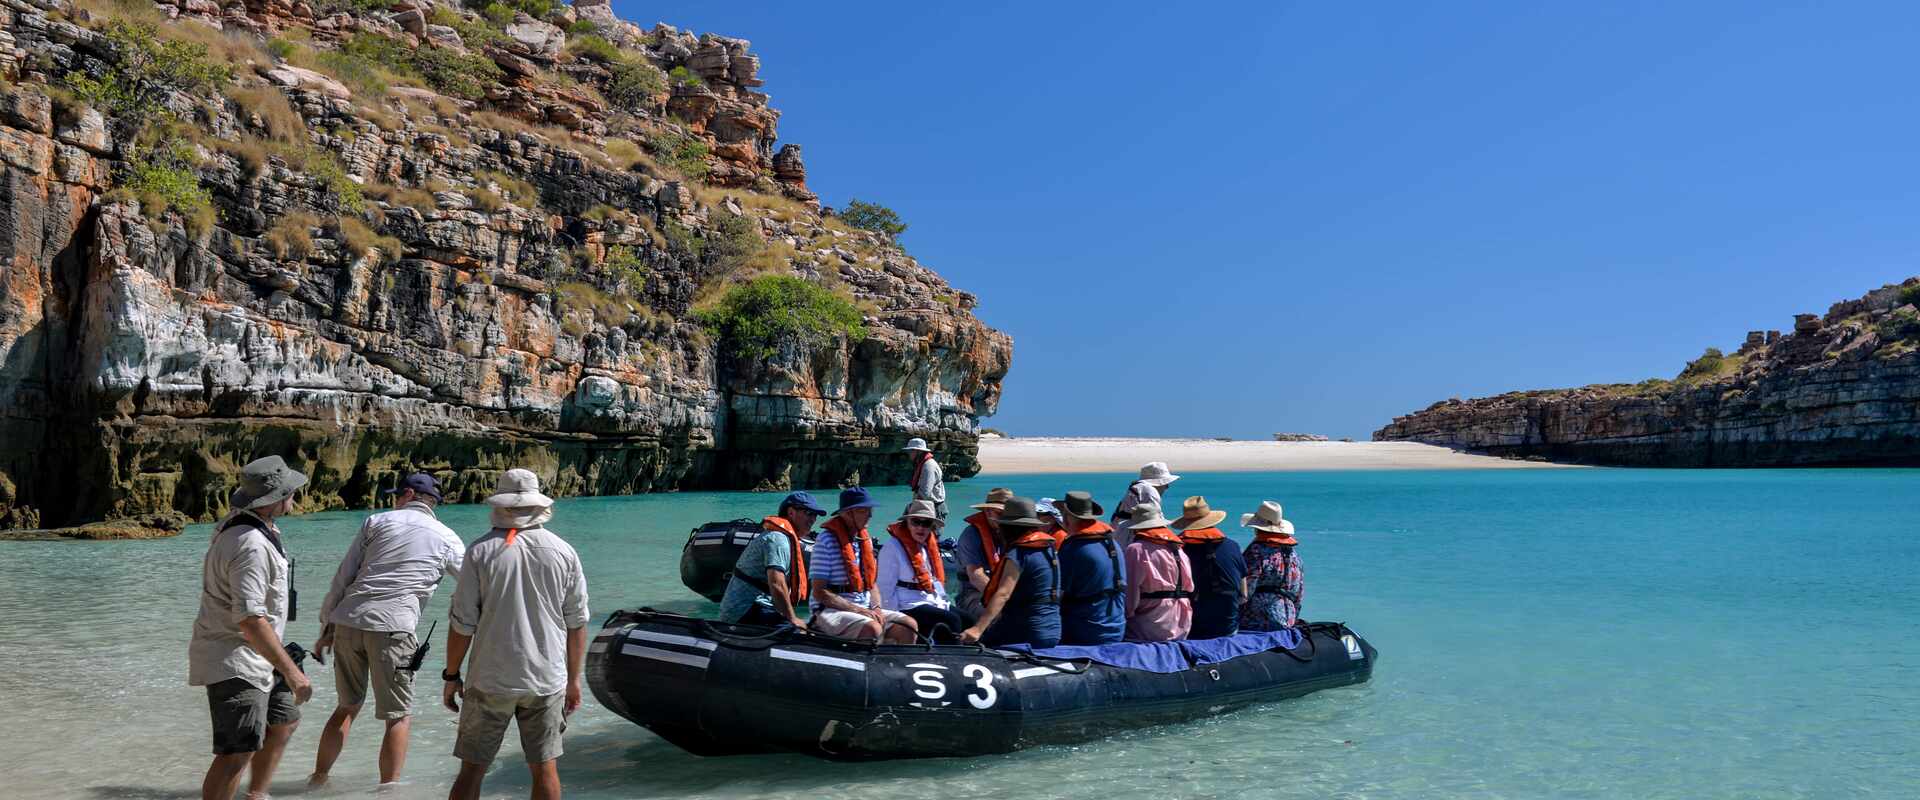 passengers zodiac expedition bigge island kimberley coast, australia